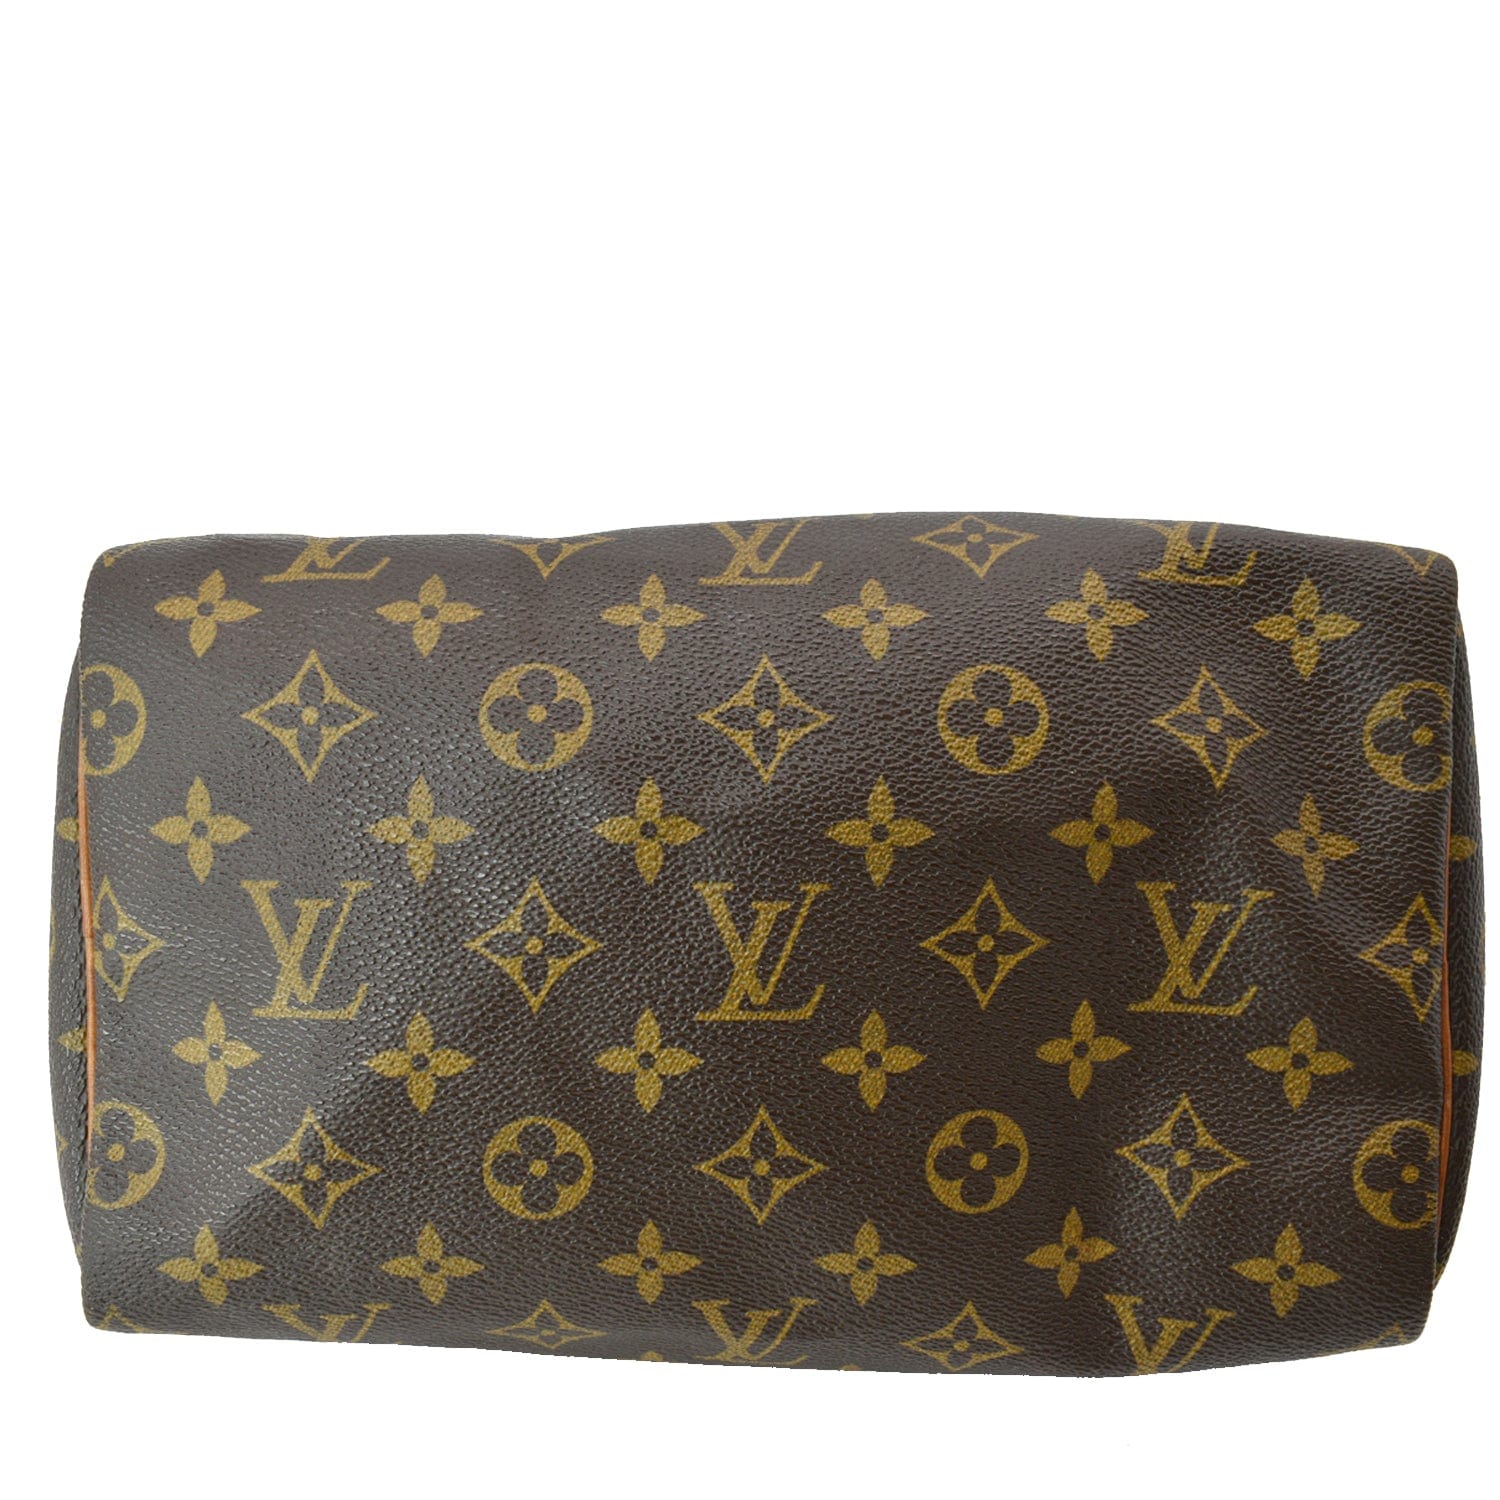 Louis Vuitton Speedy Bandouliere Bag Monogram Canvas 25 Brown 214930114